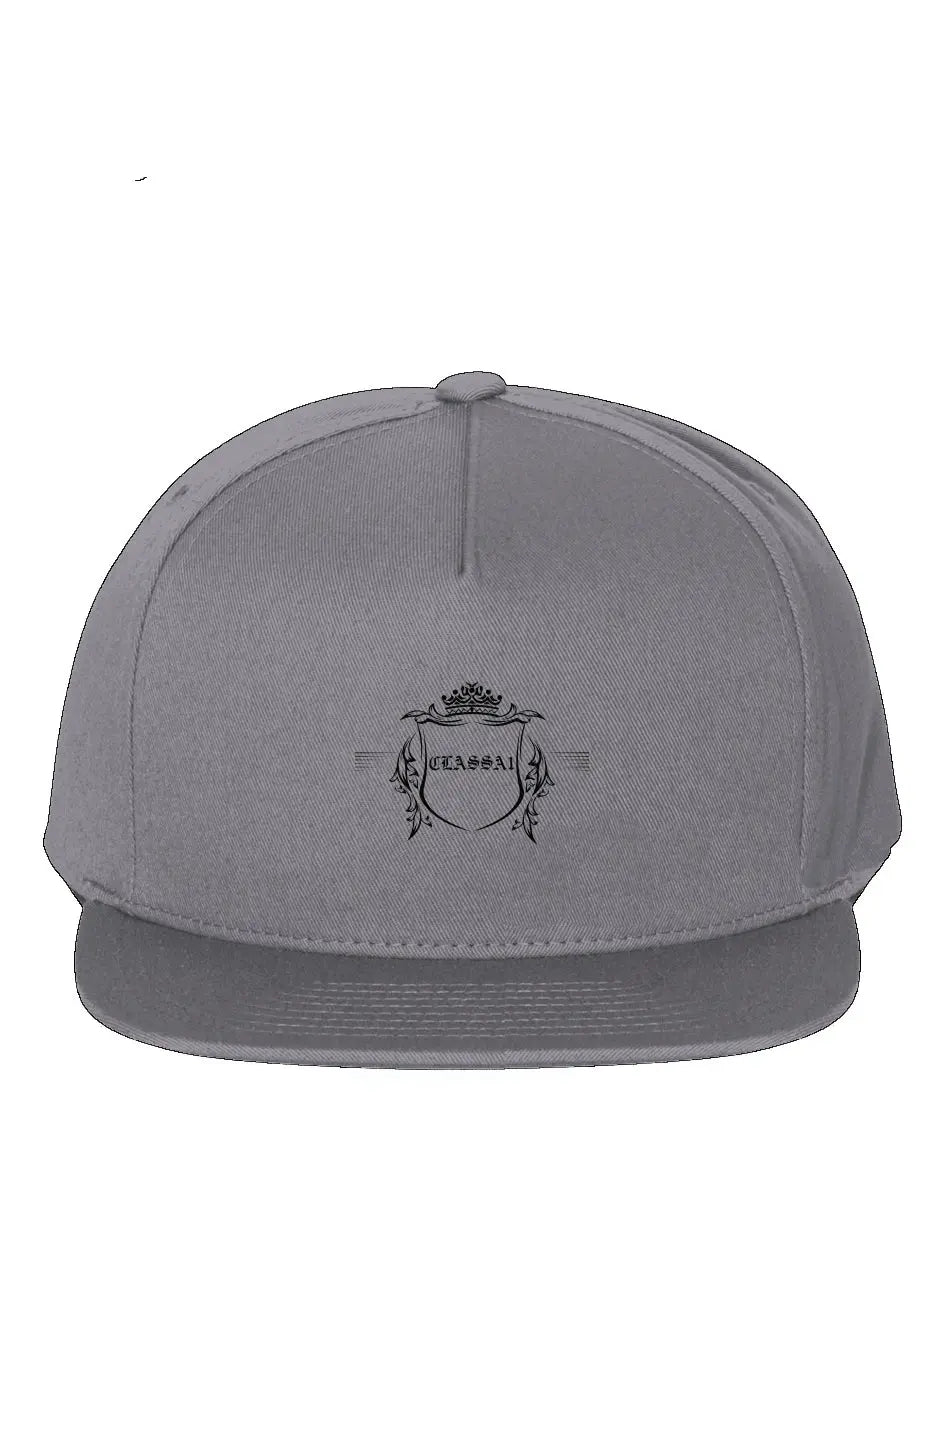 One Size Grey - ClassA1 Emblem 5-Panel Cotton Twill Snapback Cap - hats at TFC&H Co.